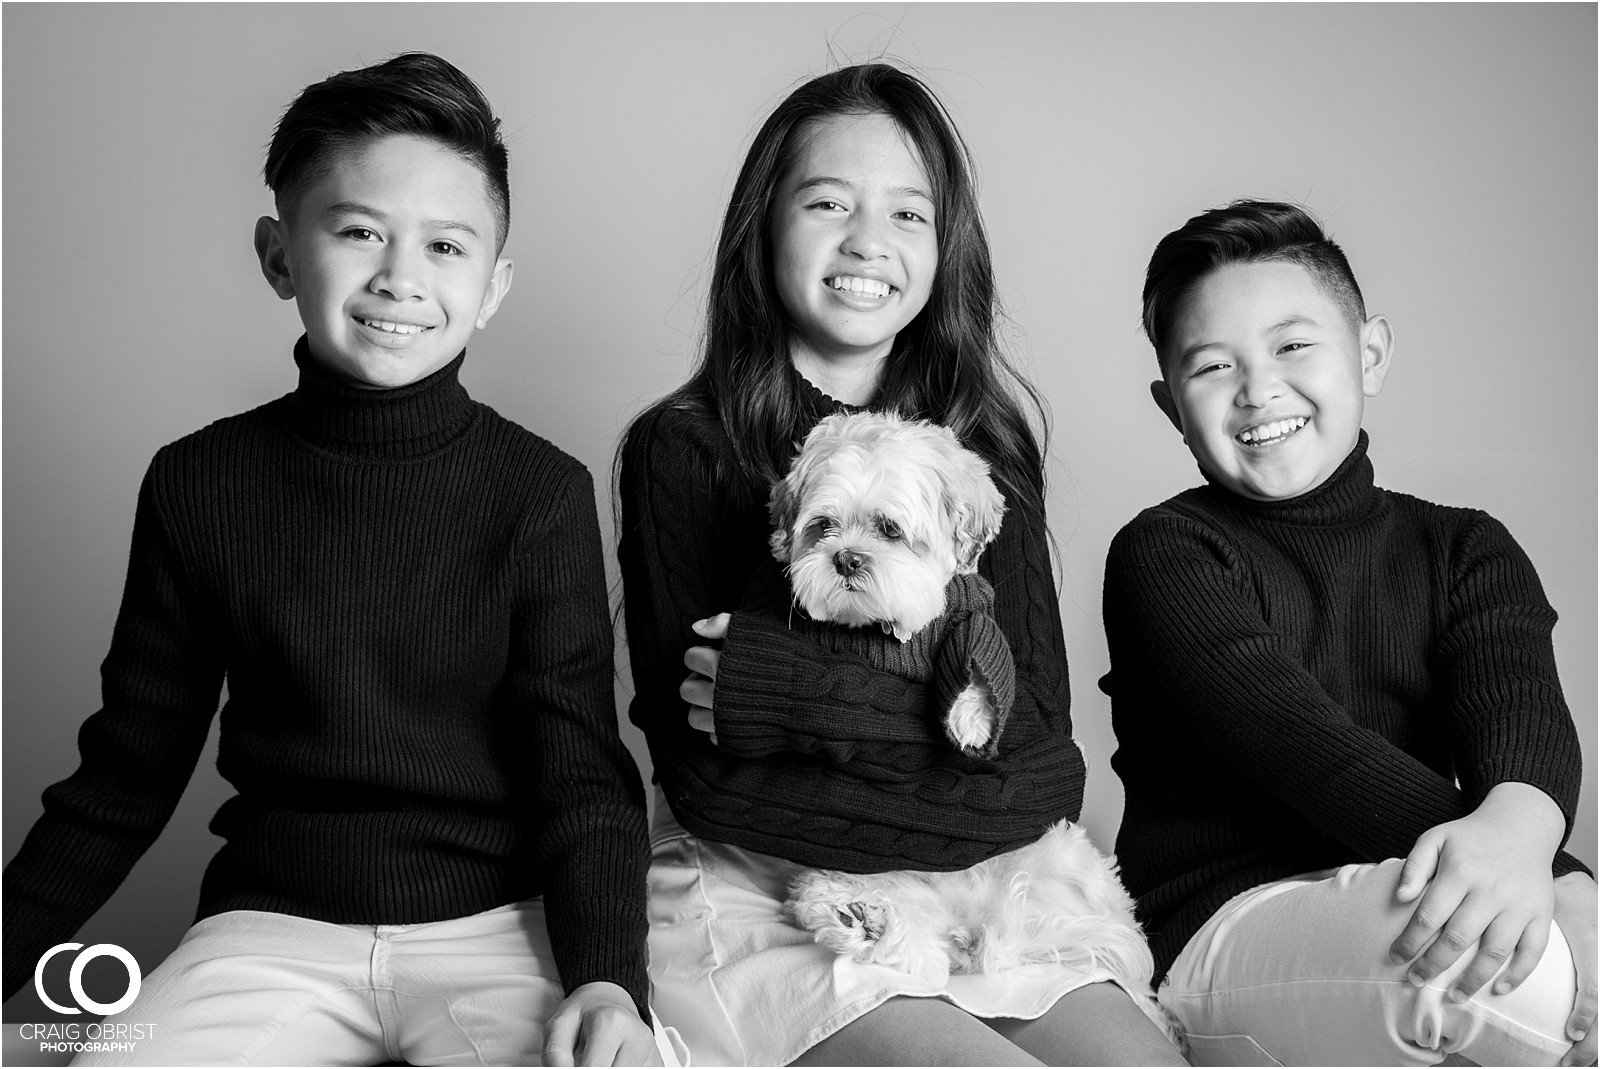 Studio Black and white bw portraits family kids models_0026.jpg